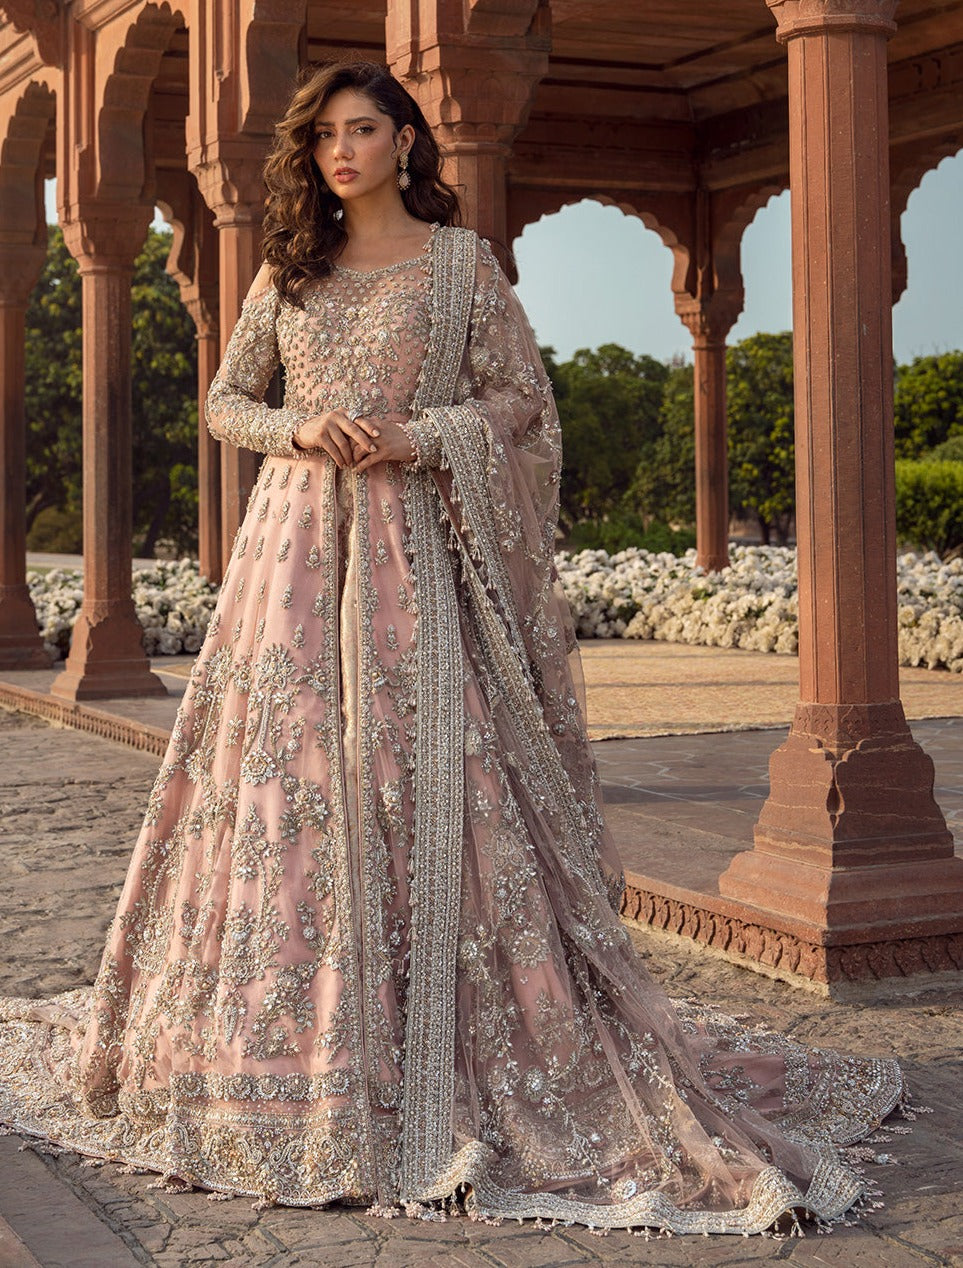 Pakistani Wedding Dress in Bridal Lehenga Gown Style – Nameera by Farooq